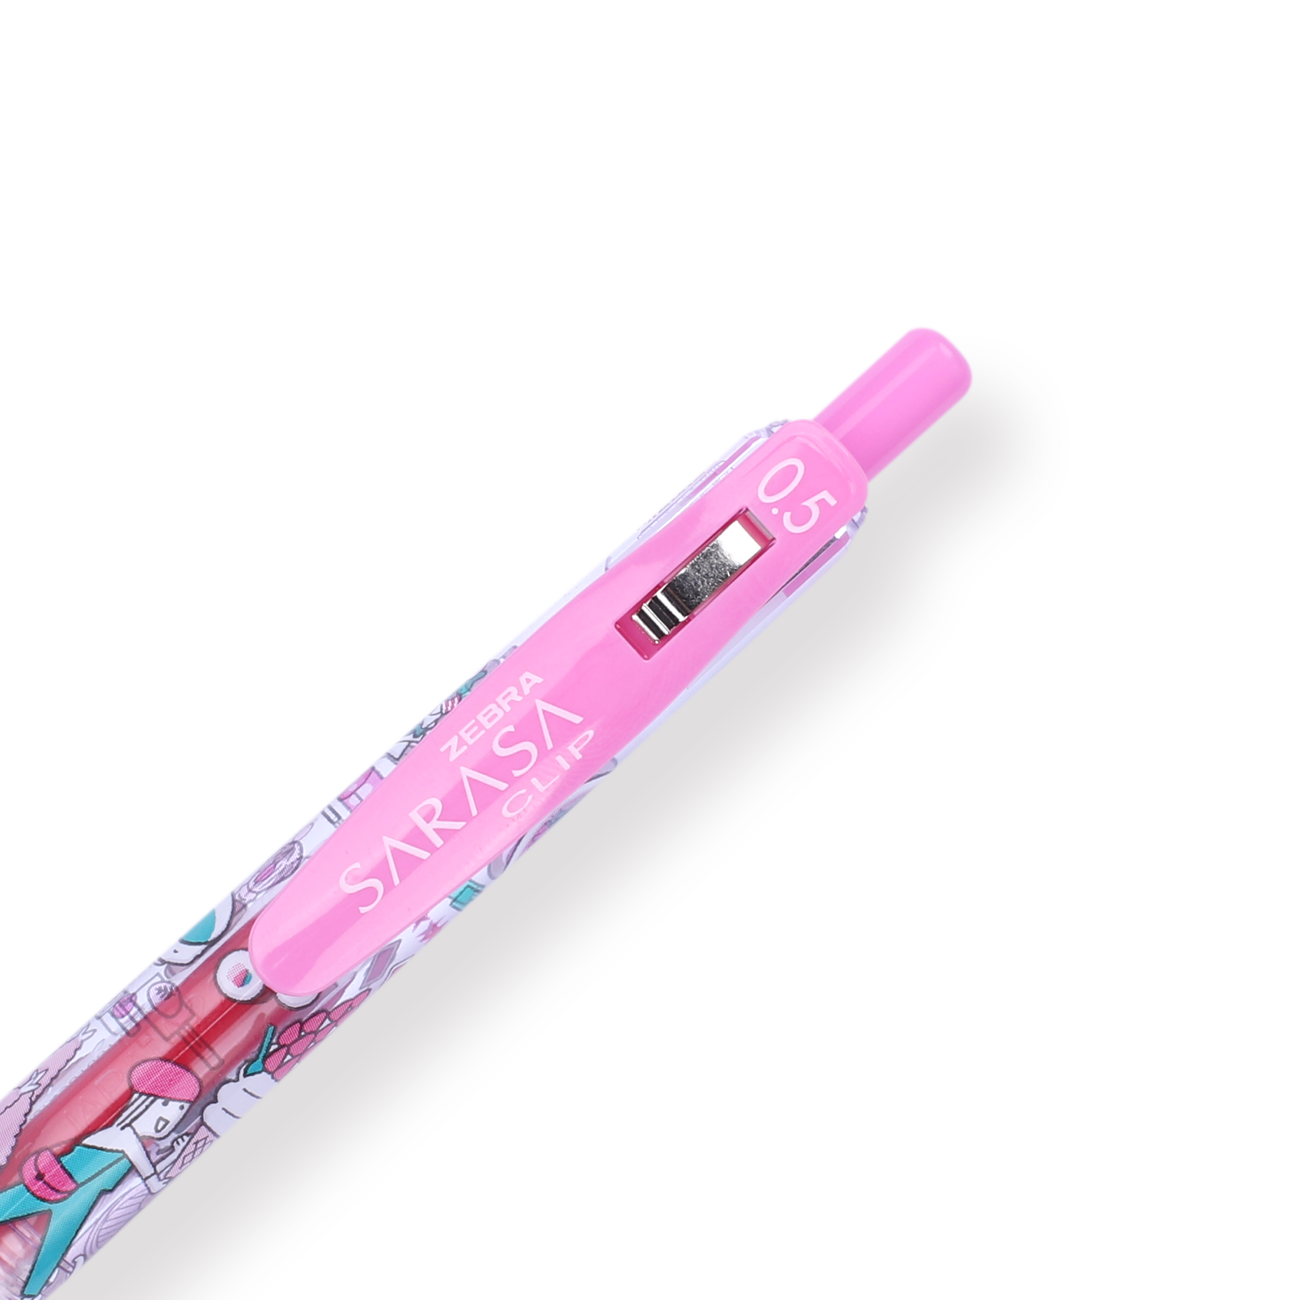 Zebra Sarasa Limited Edition Clip Gel Pen - Petit Trip Series - 0.5 mm - Light Pink